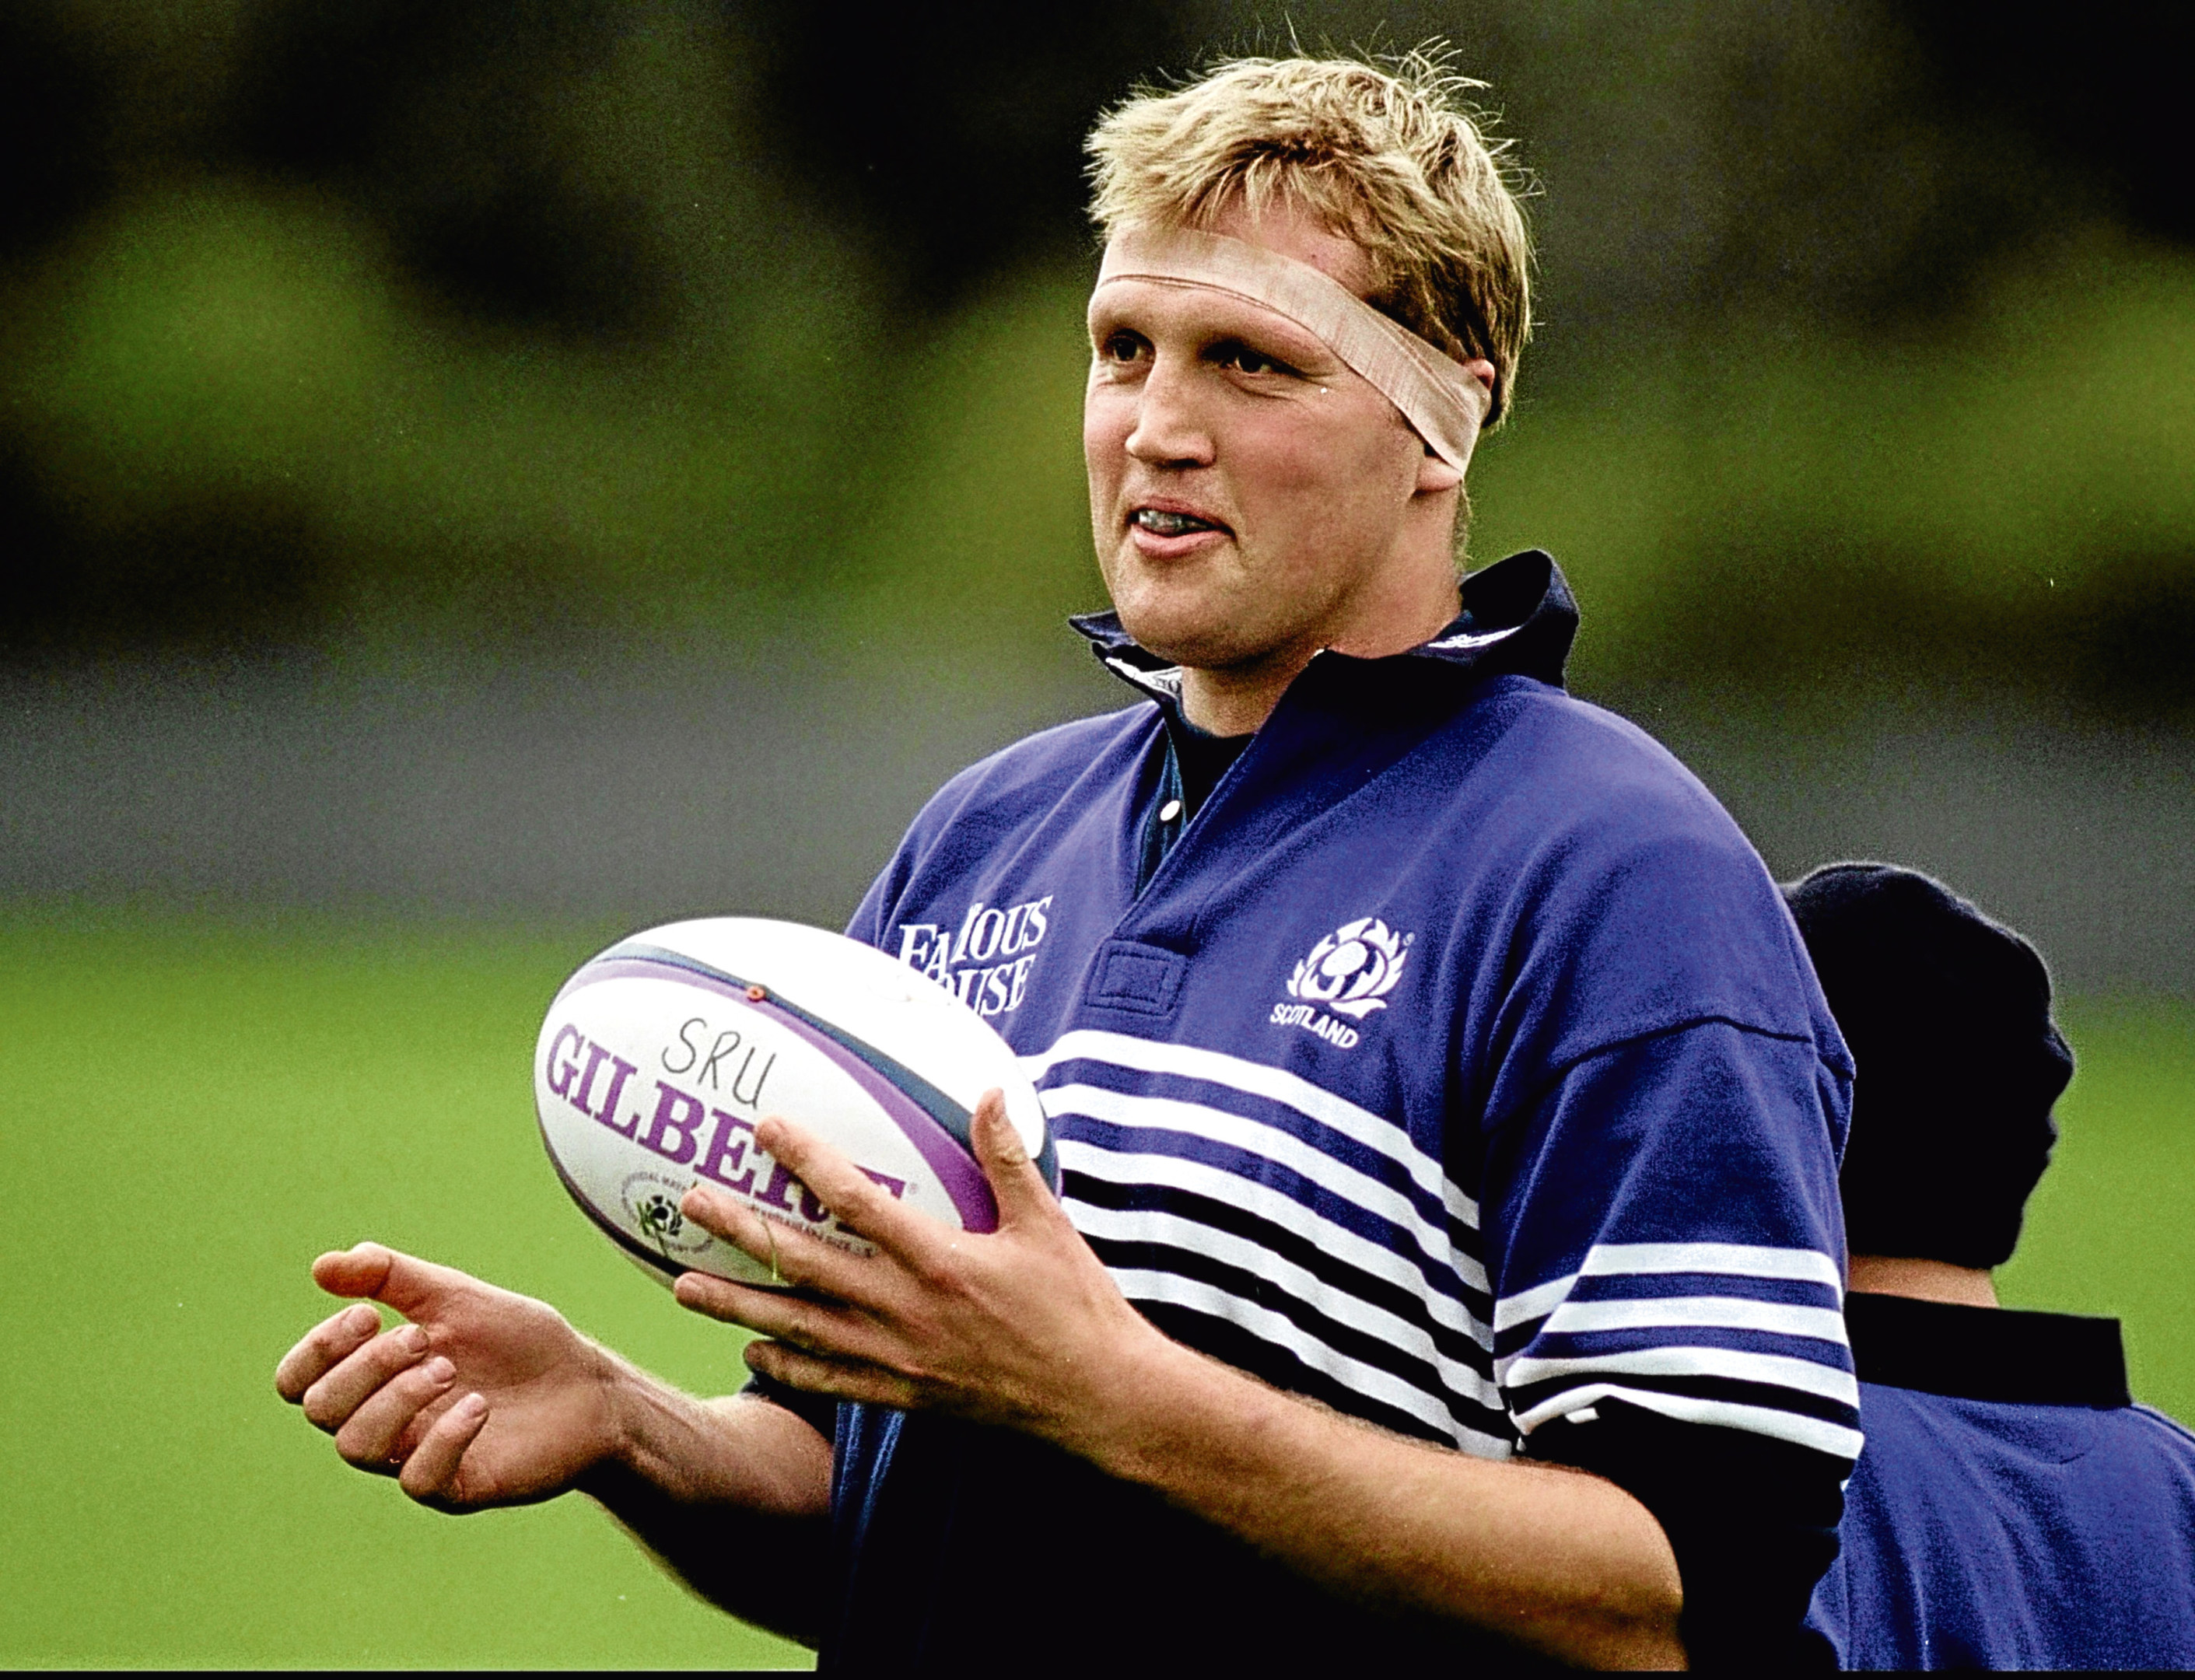 Doddie Weir during a training session in 1998.